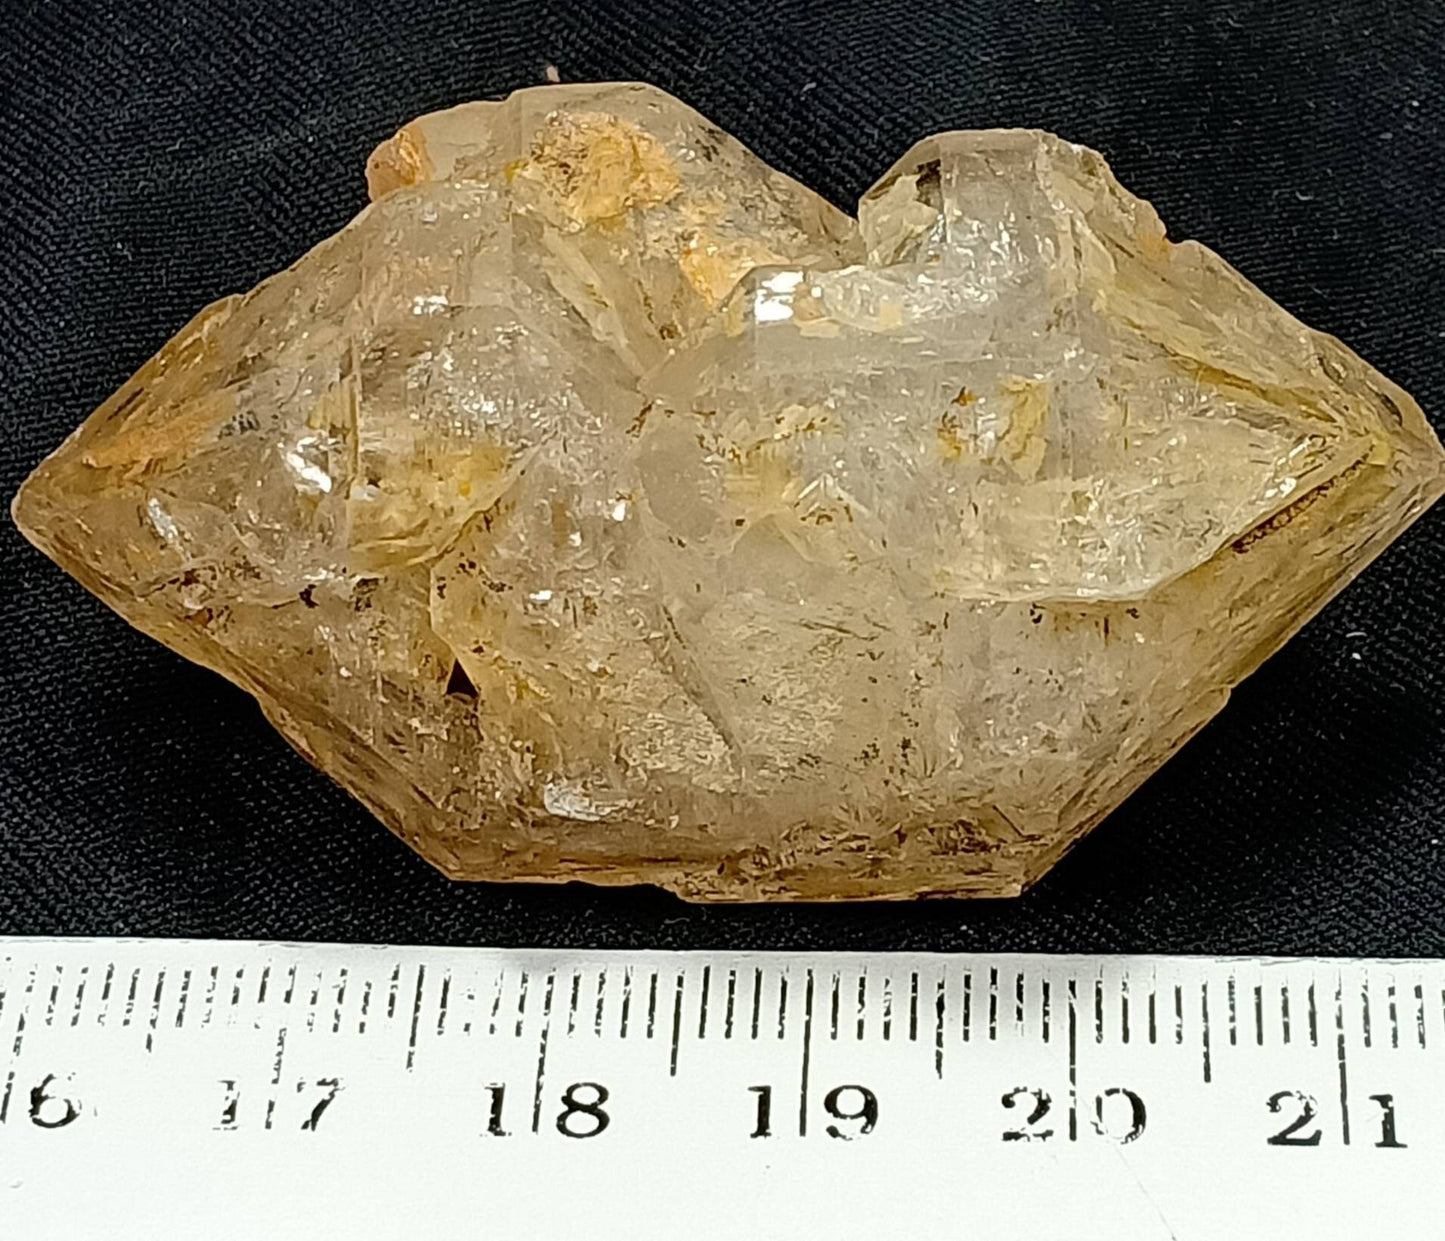 Single double terminated Fenster Quartz Crystal 46 grams